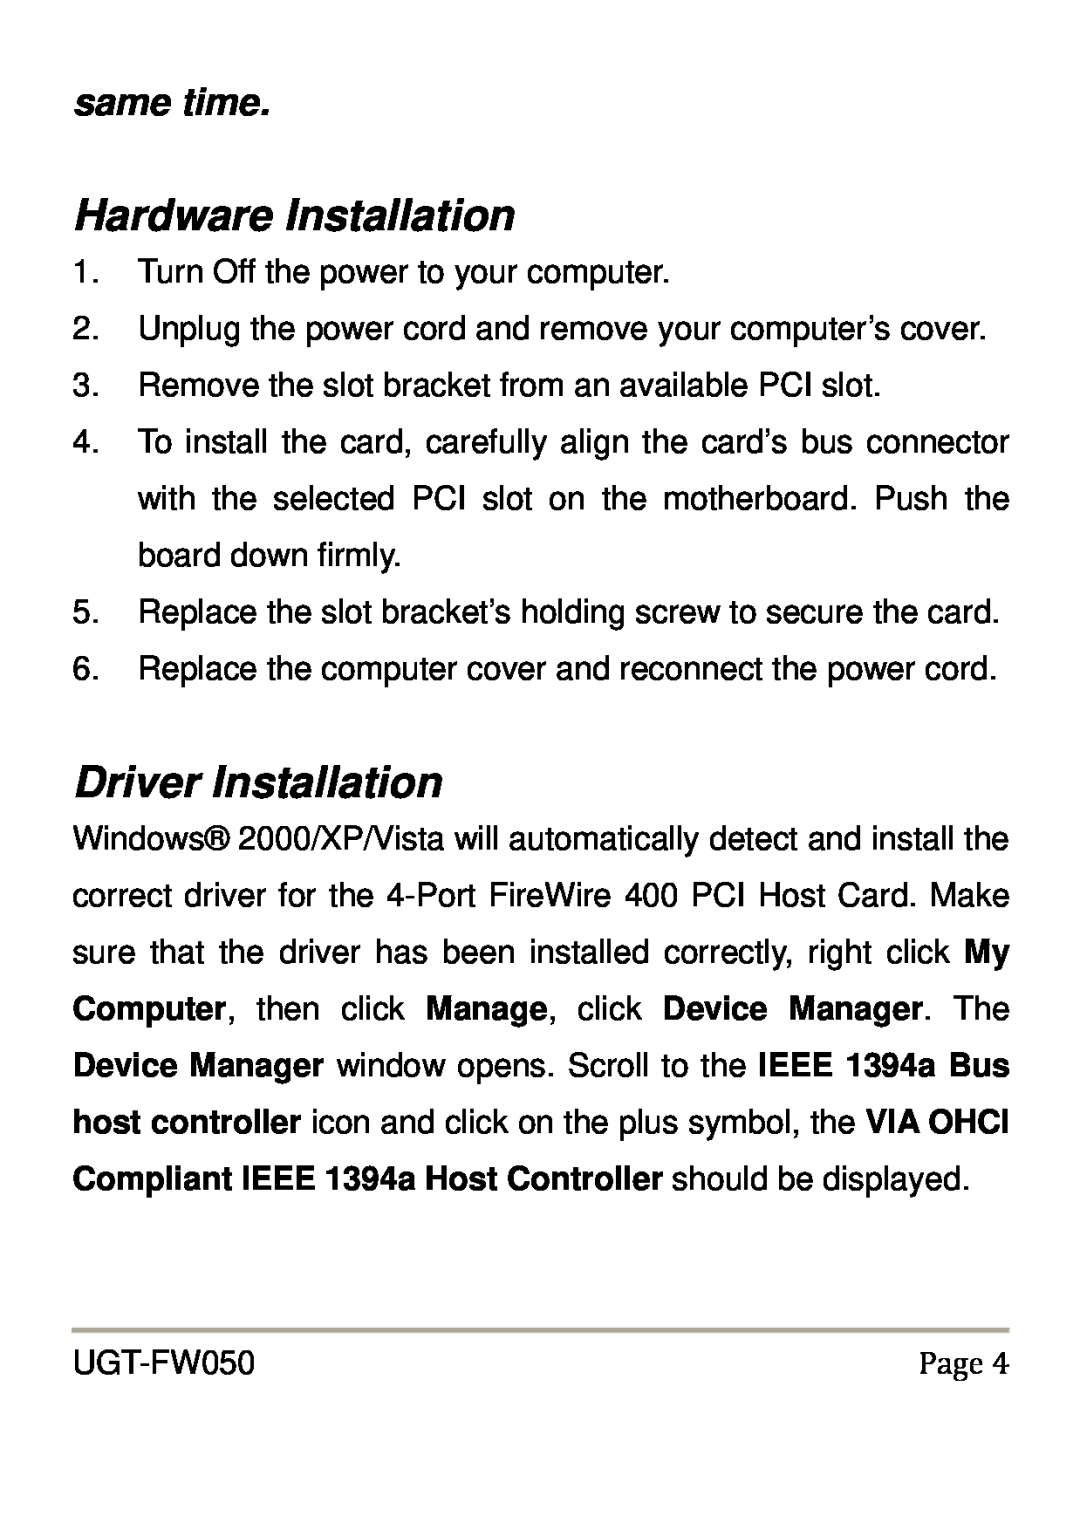 Vantec UGT-FW050 user manual Hardware Installation, Driver Installation, same time 